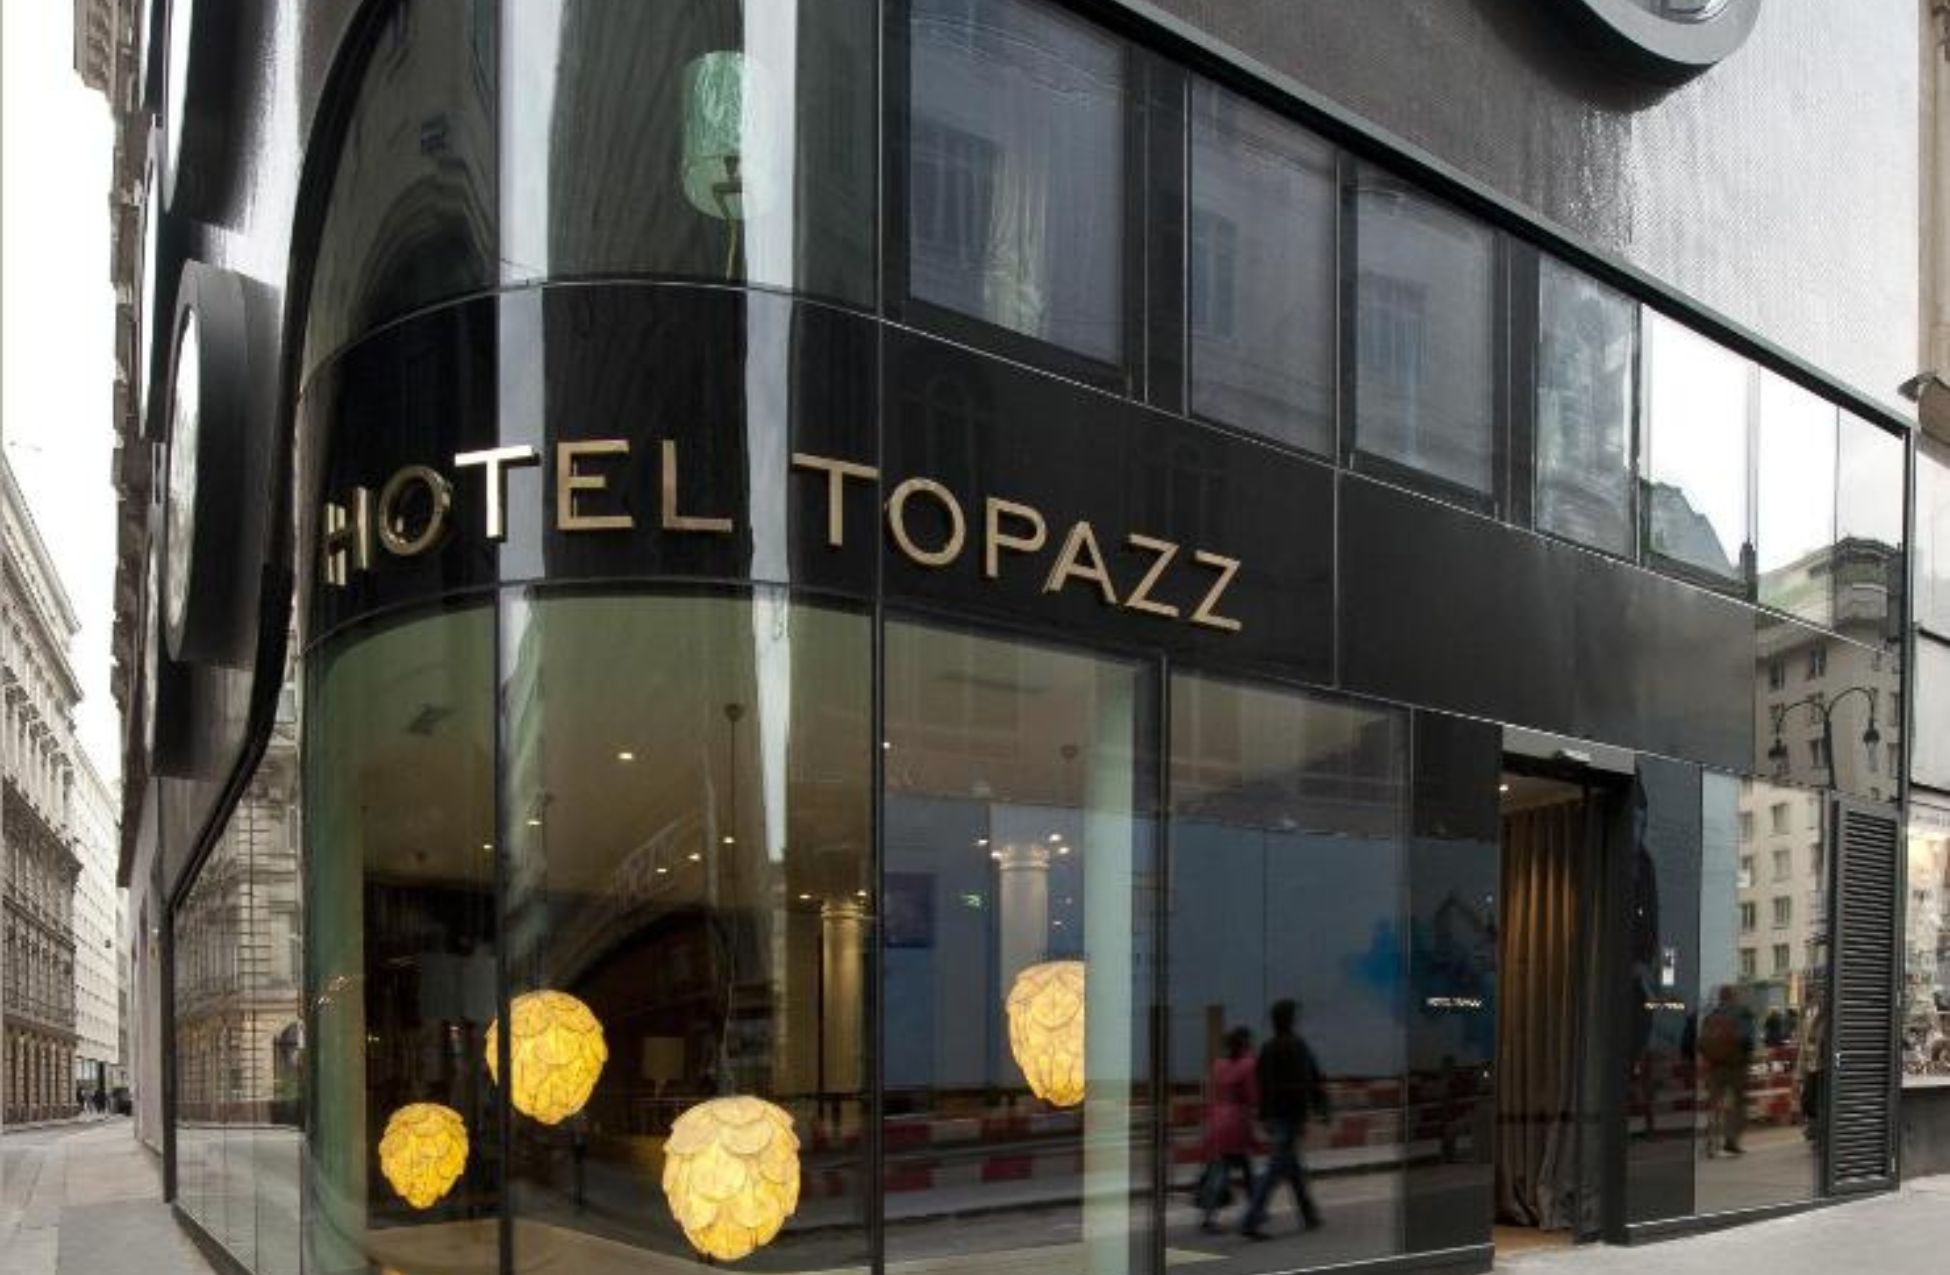 The Hotel Topazz & Lamée - Best Hotels In Vienna